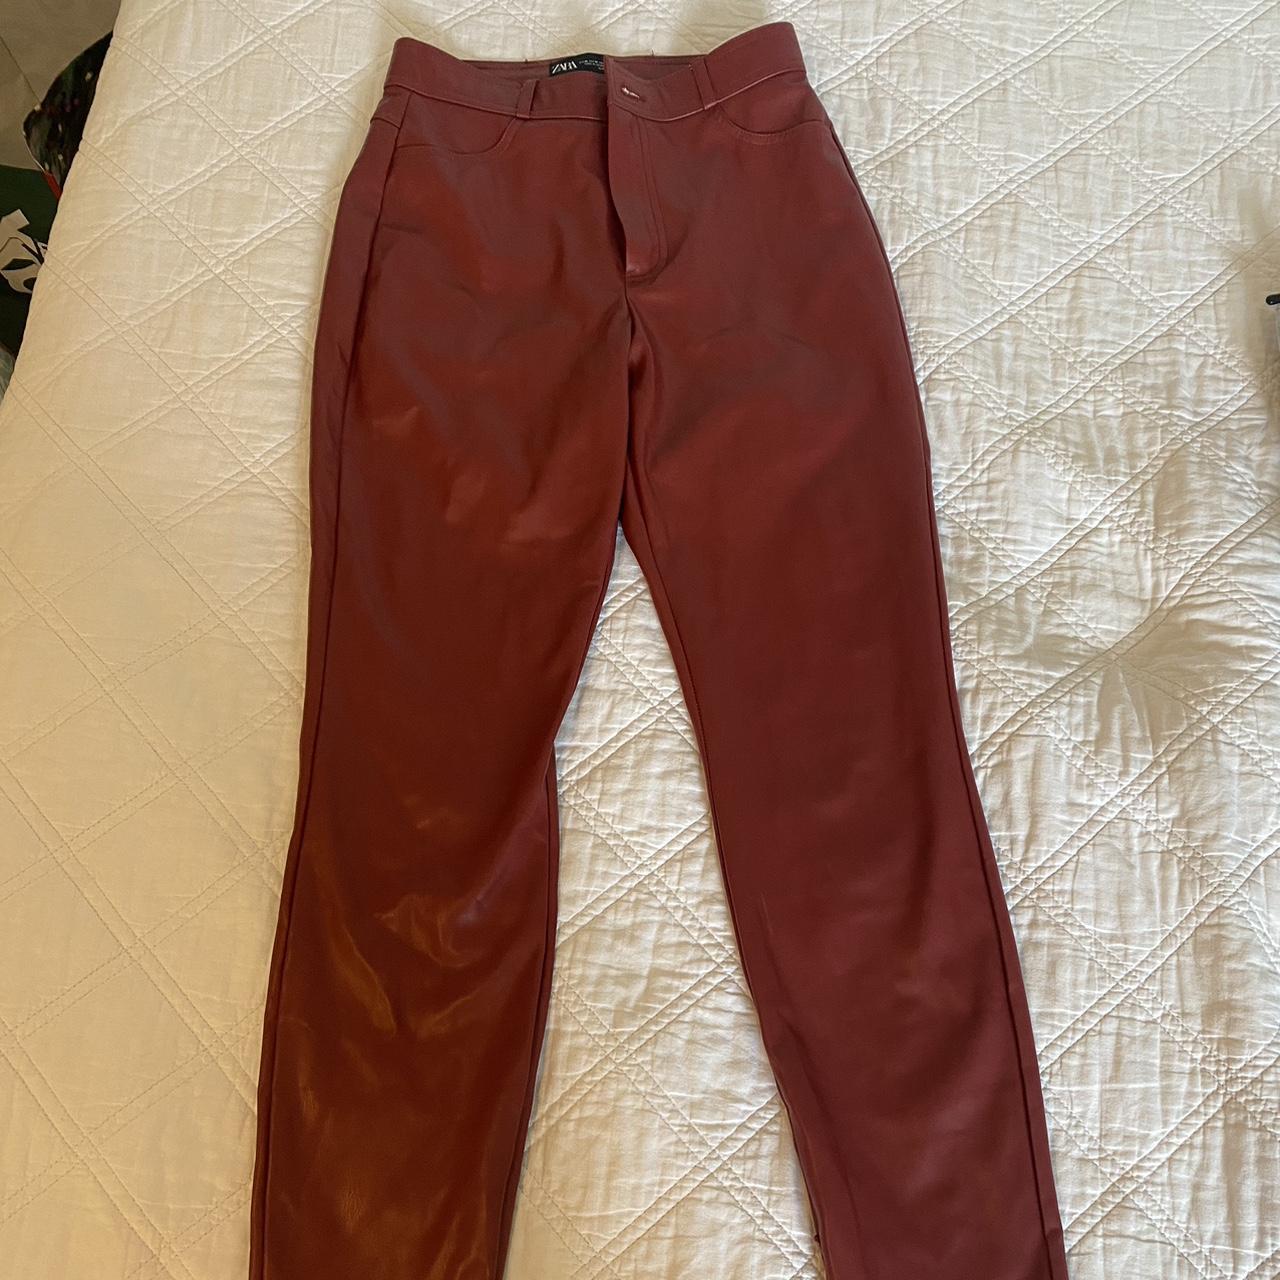 Zara Red Leather Pants Faux leather, red/garnet... - Depop